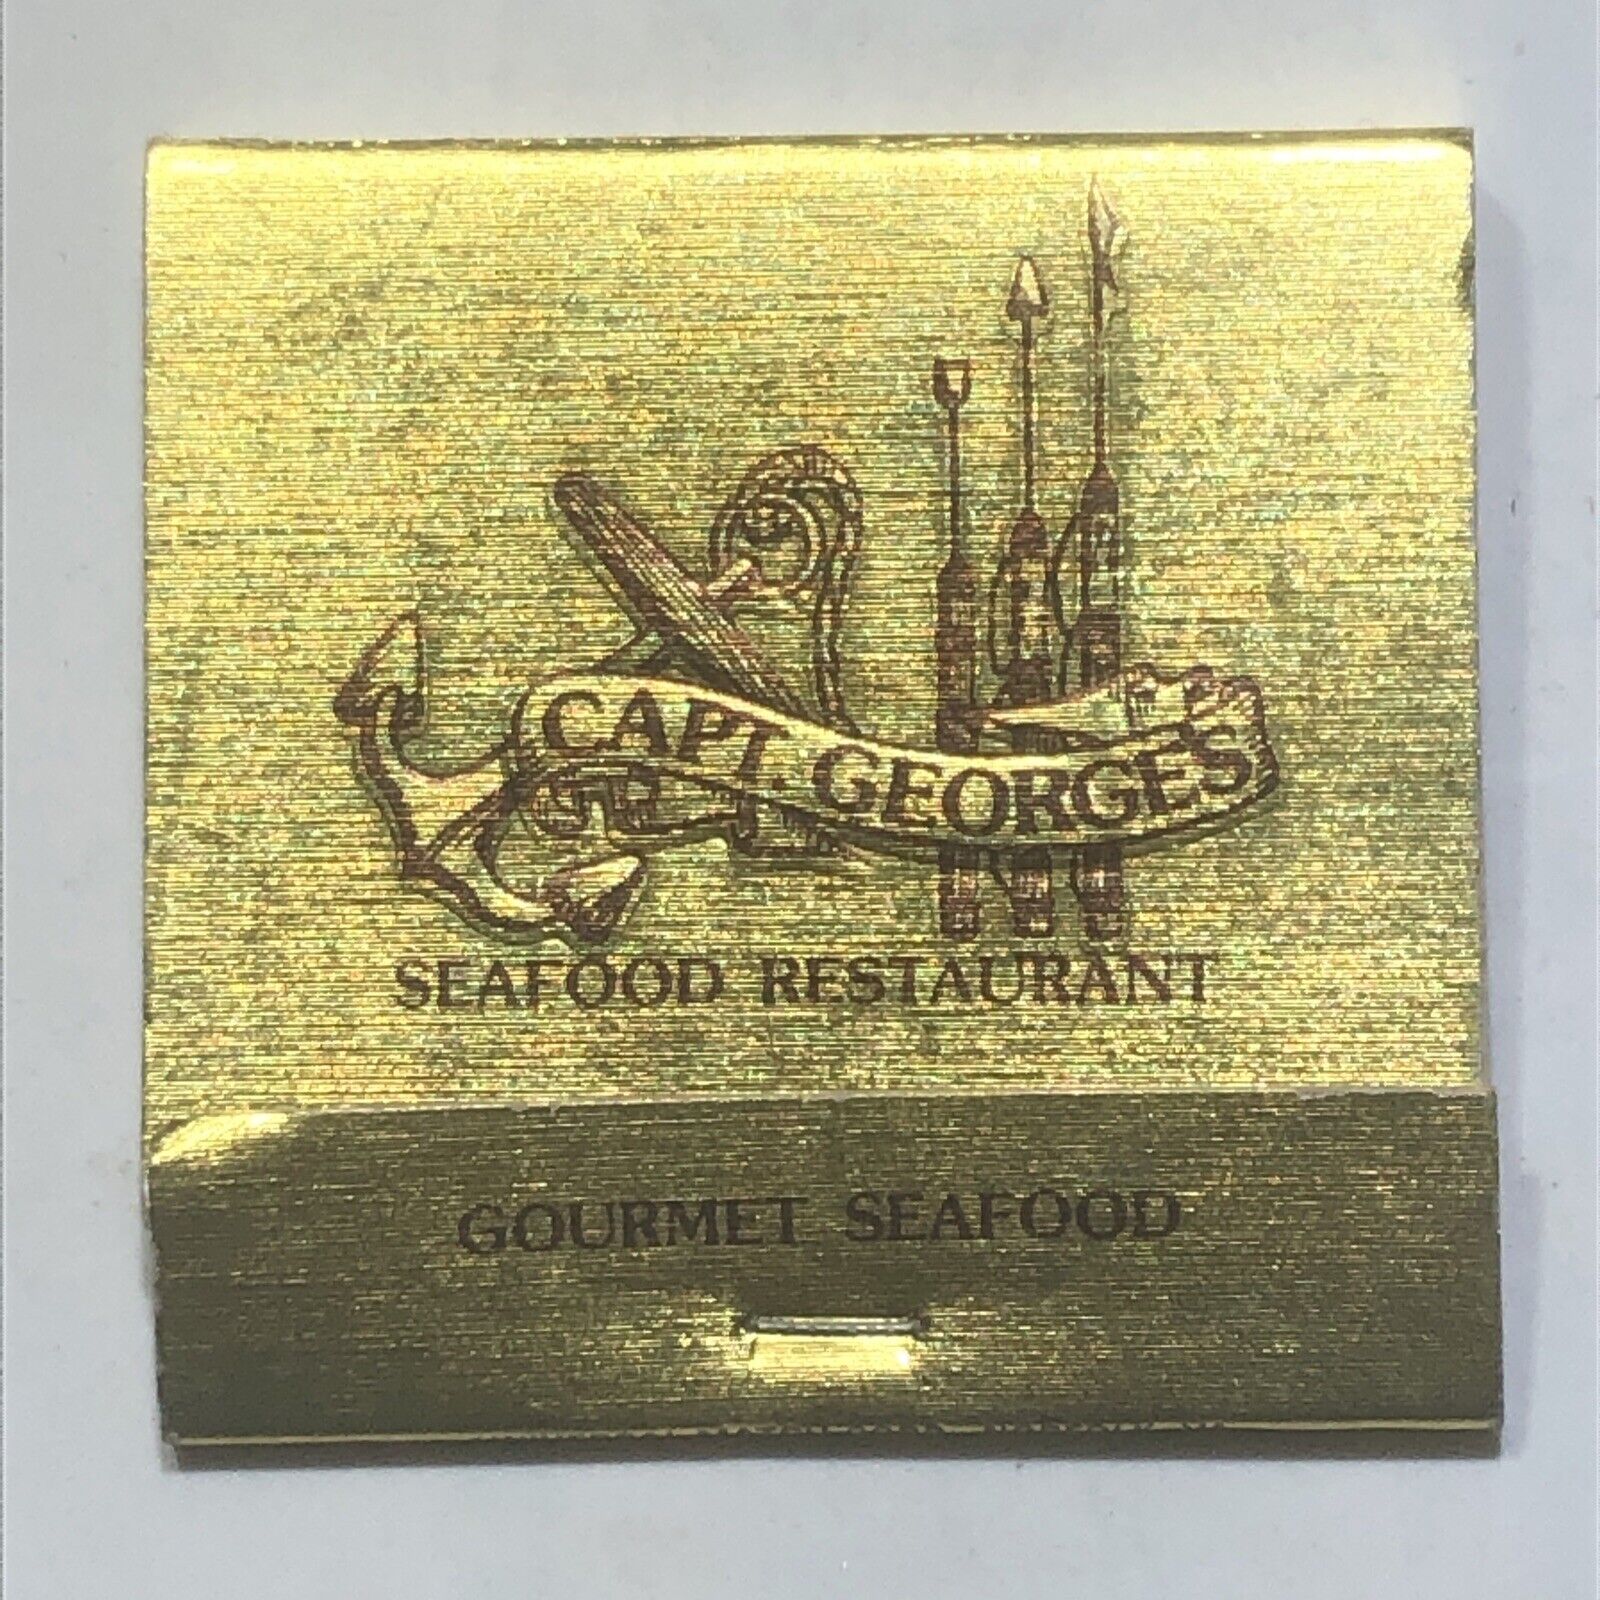 Capt Georges Restaurant Dining Hampton Virginia Match Book Cover Matchbox